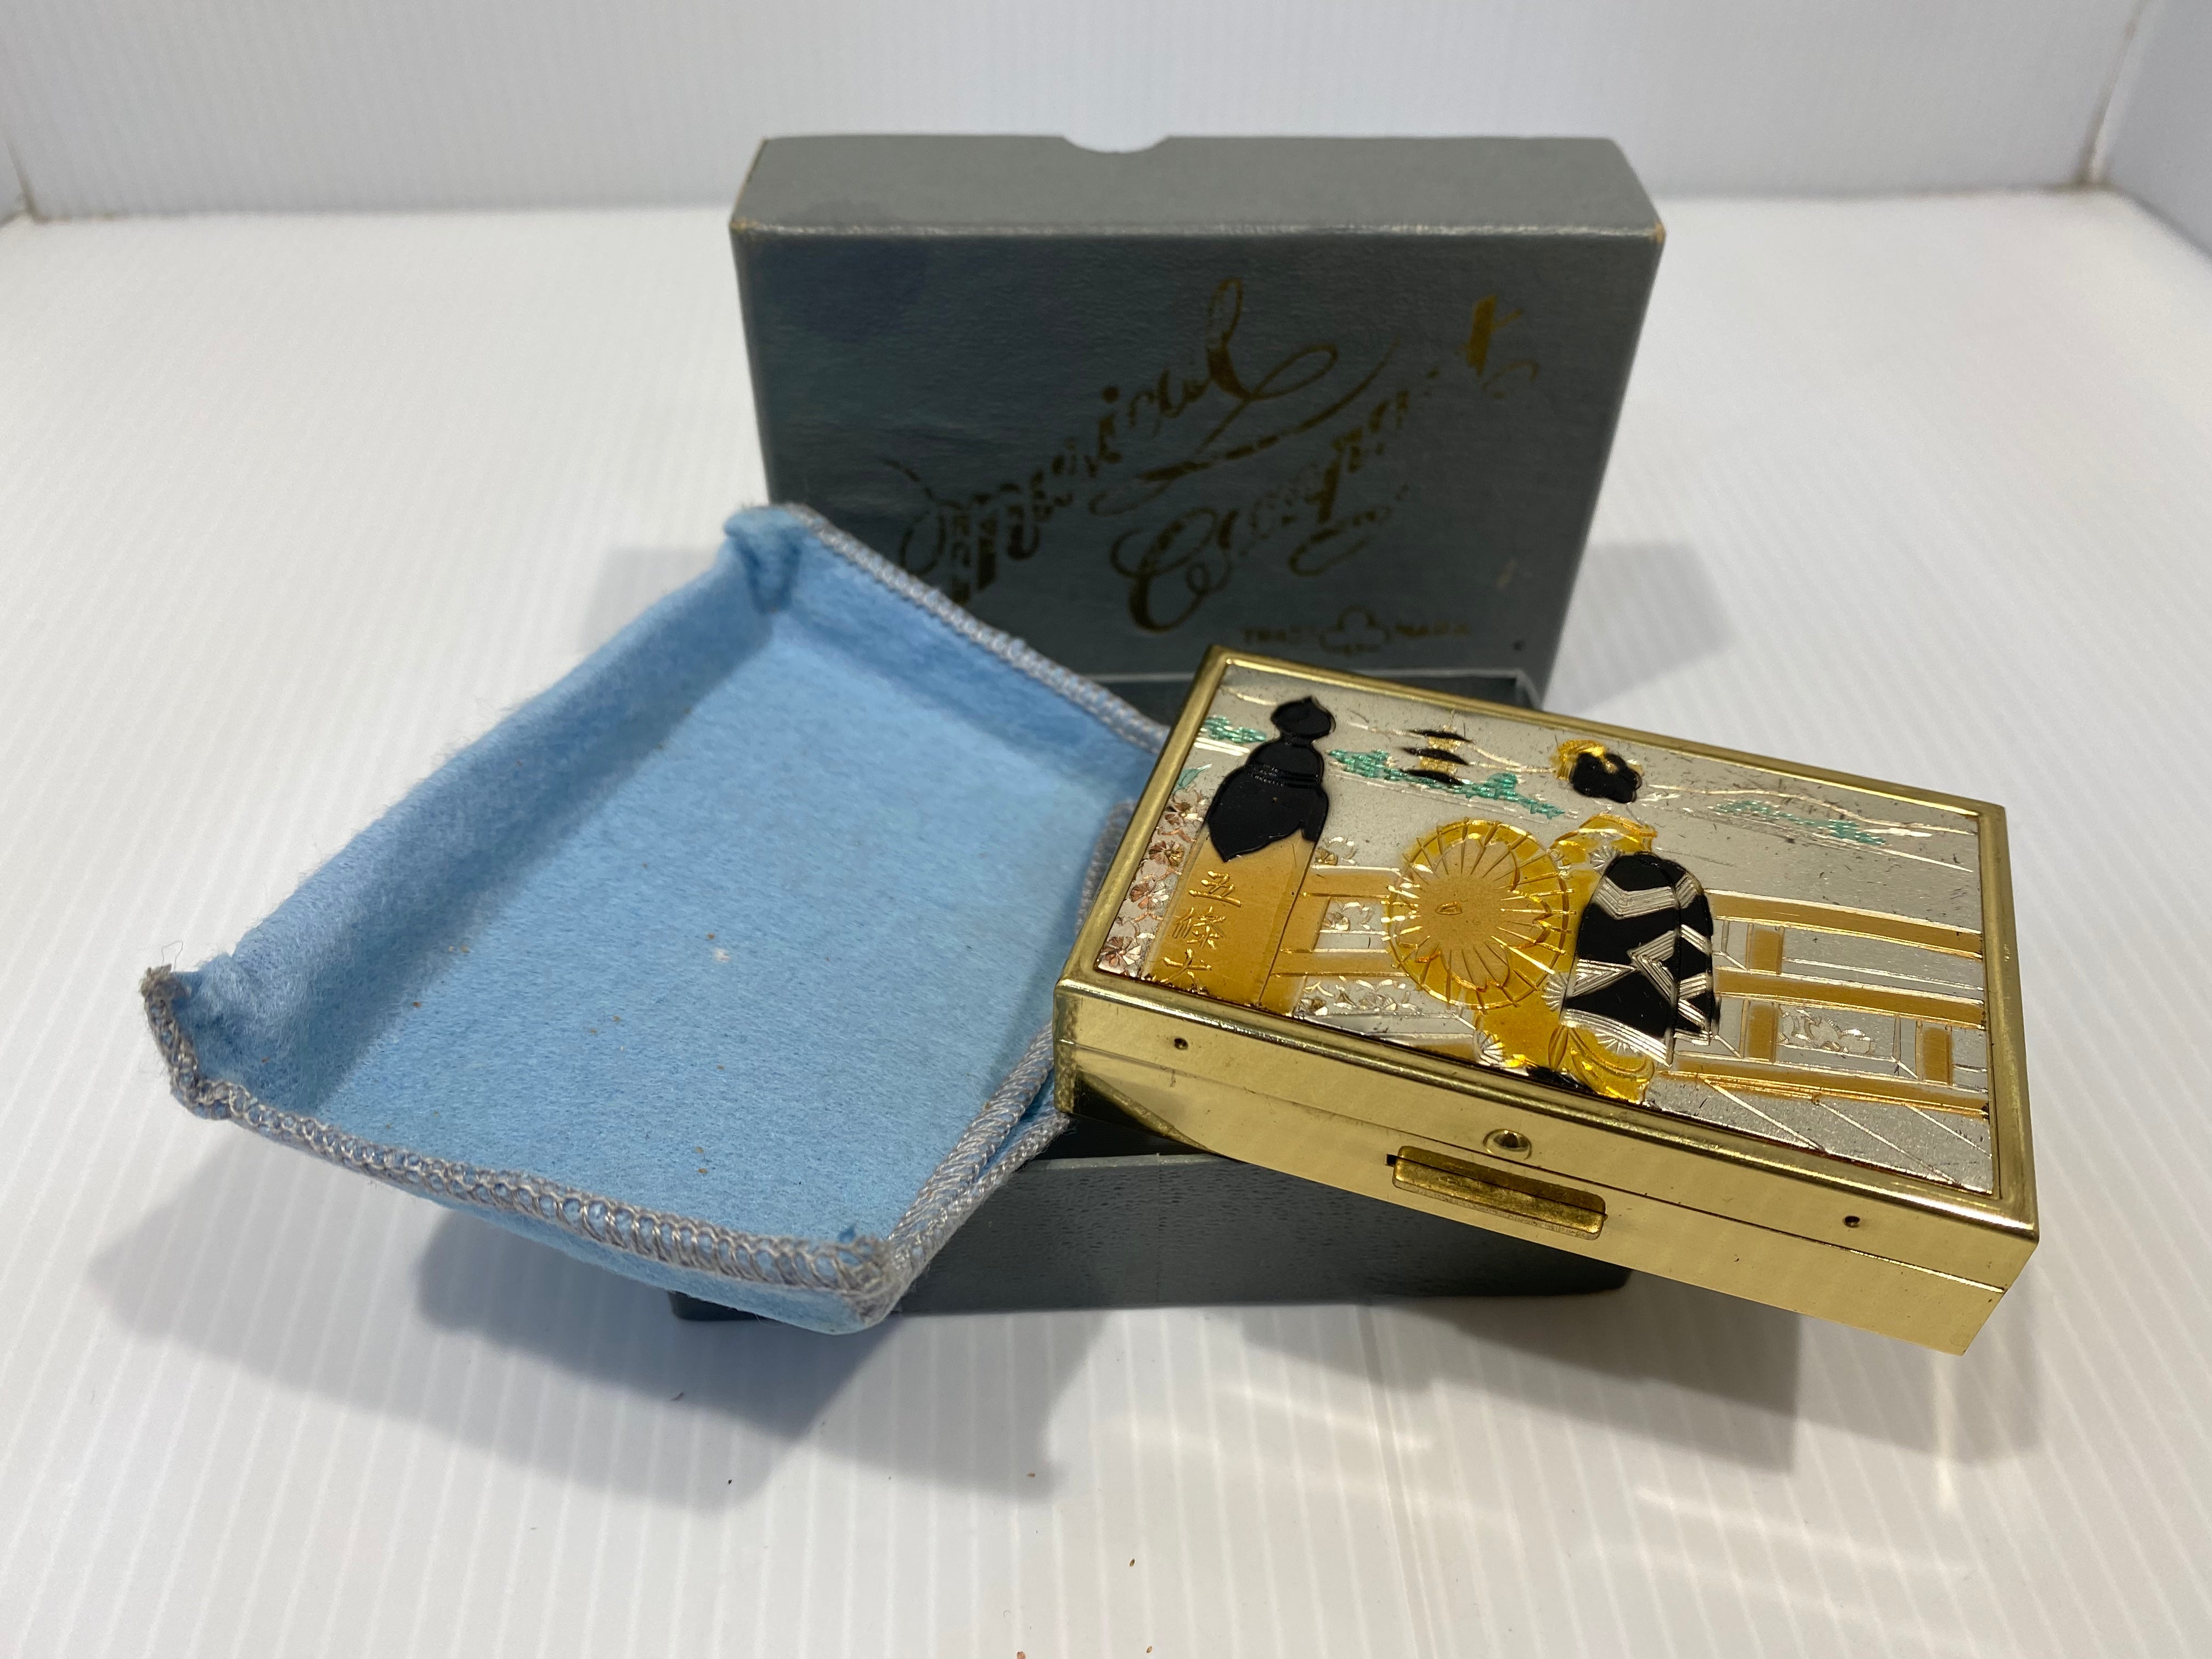 Clover Musical Compact makeup box. 1950s